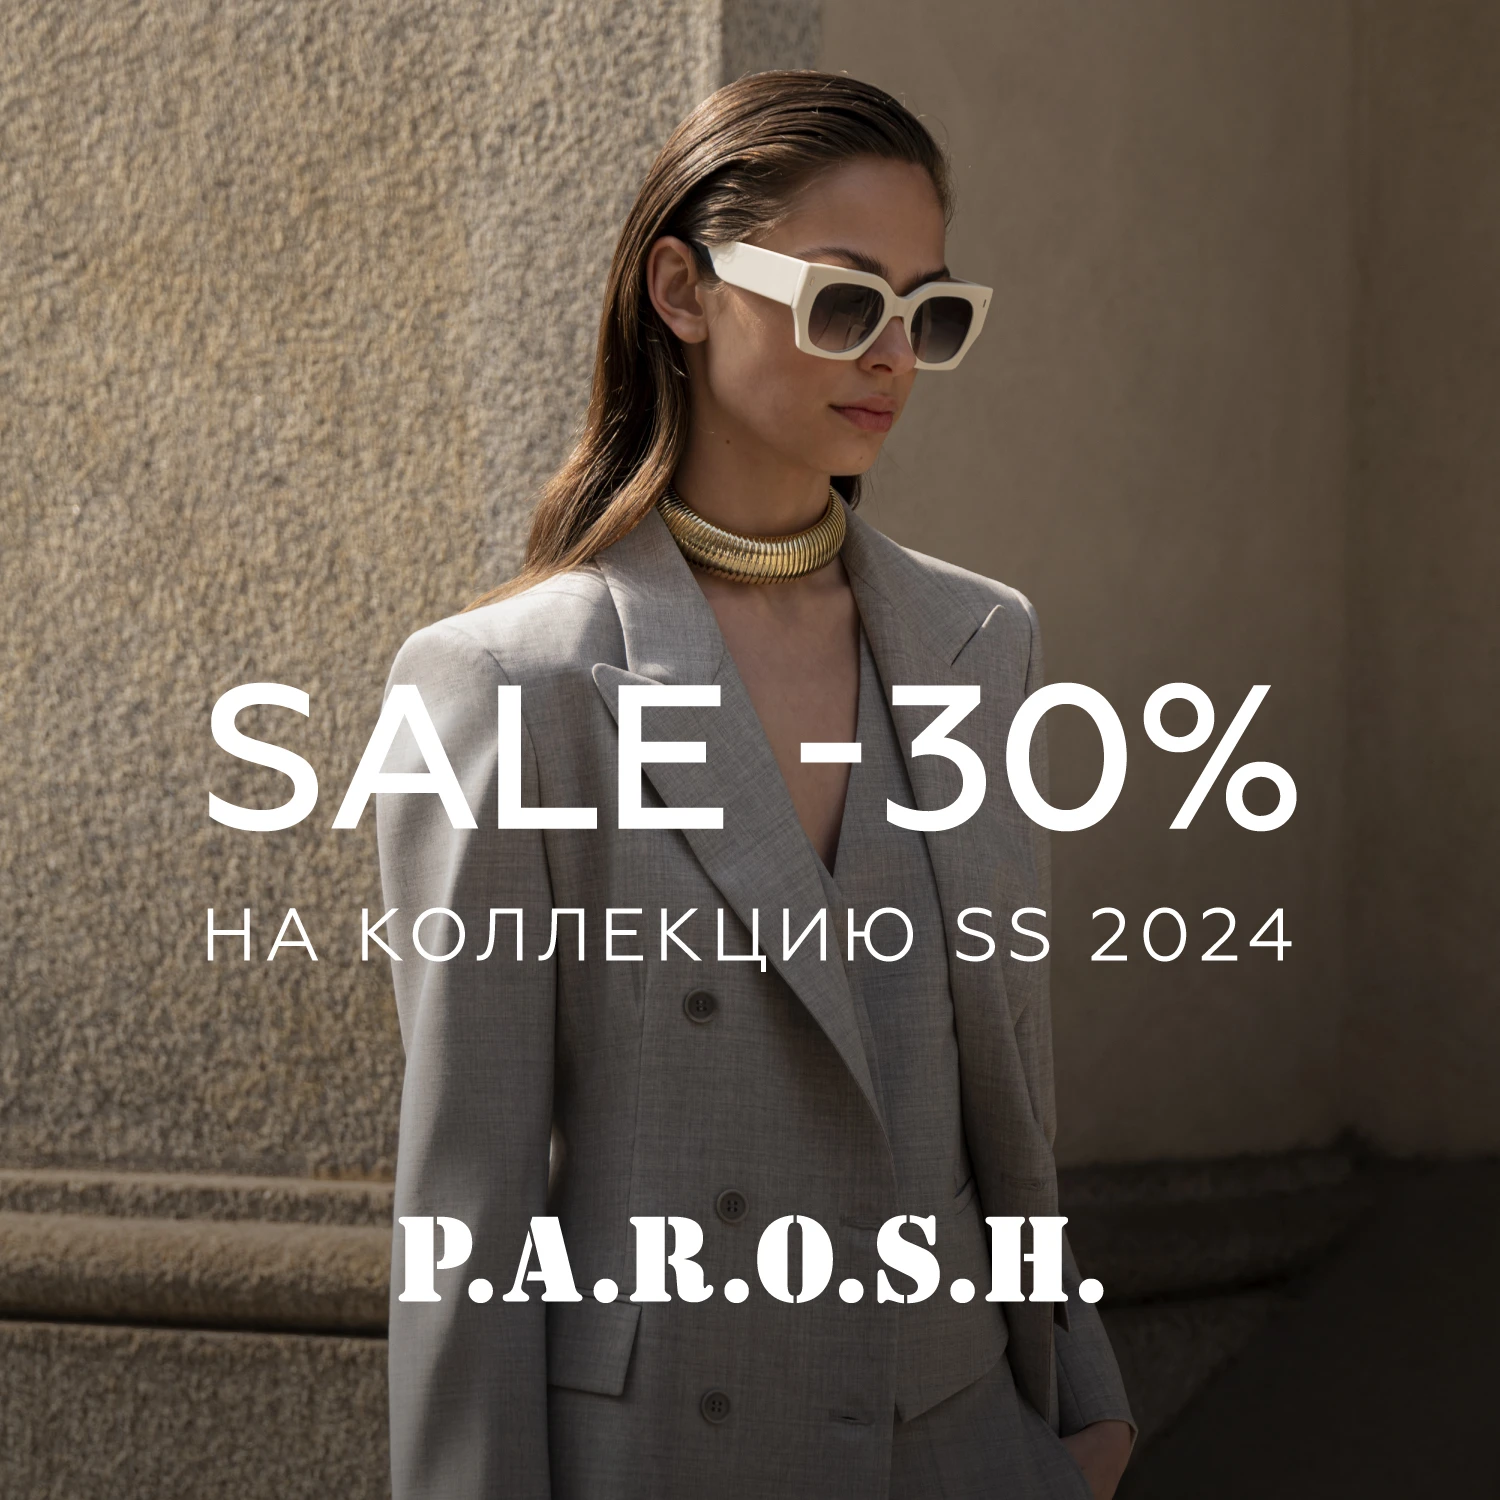 SALE 30% в бутике P.A.R.O.S.H.